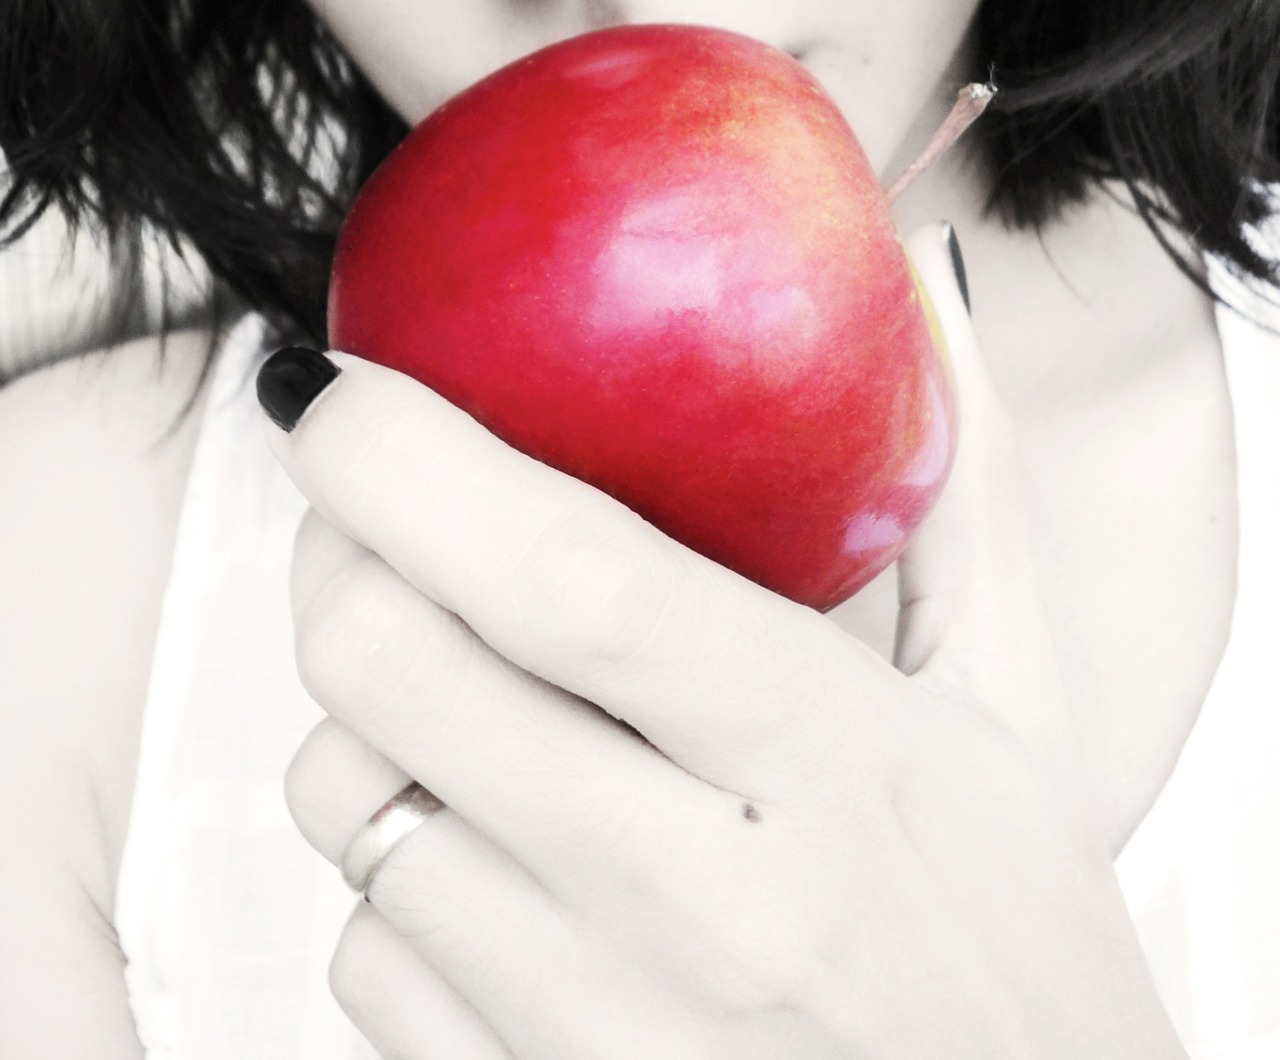 snow white apple red free photo